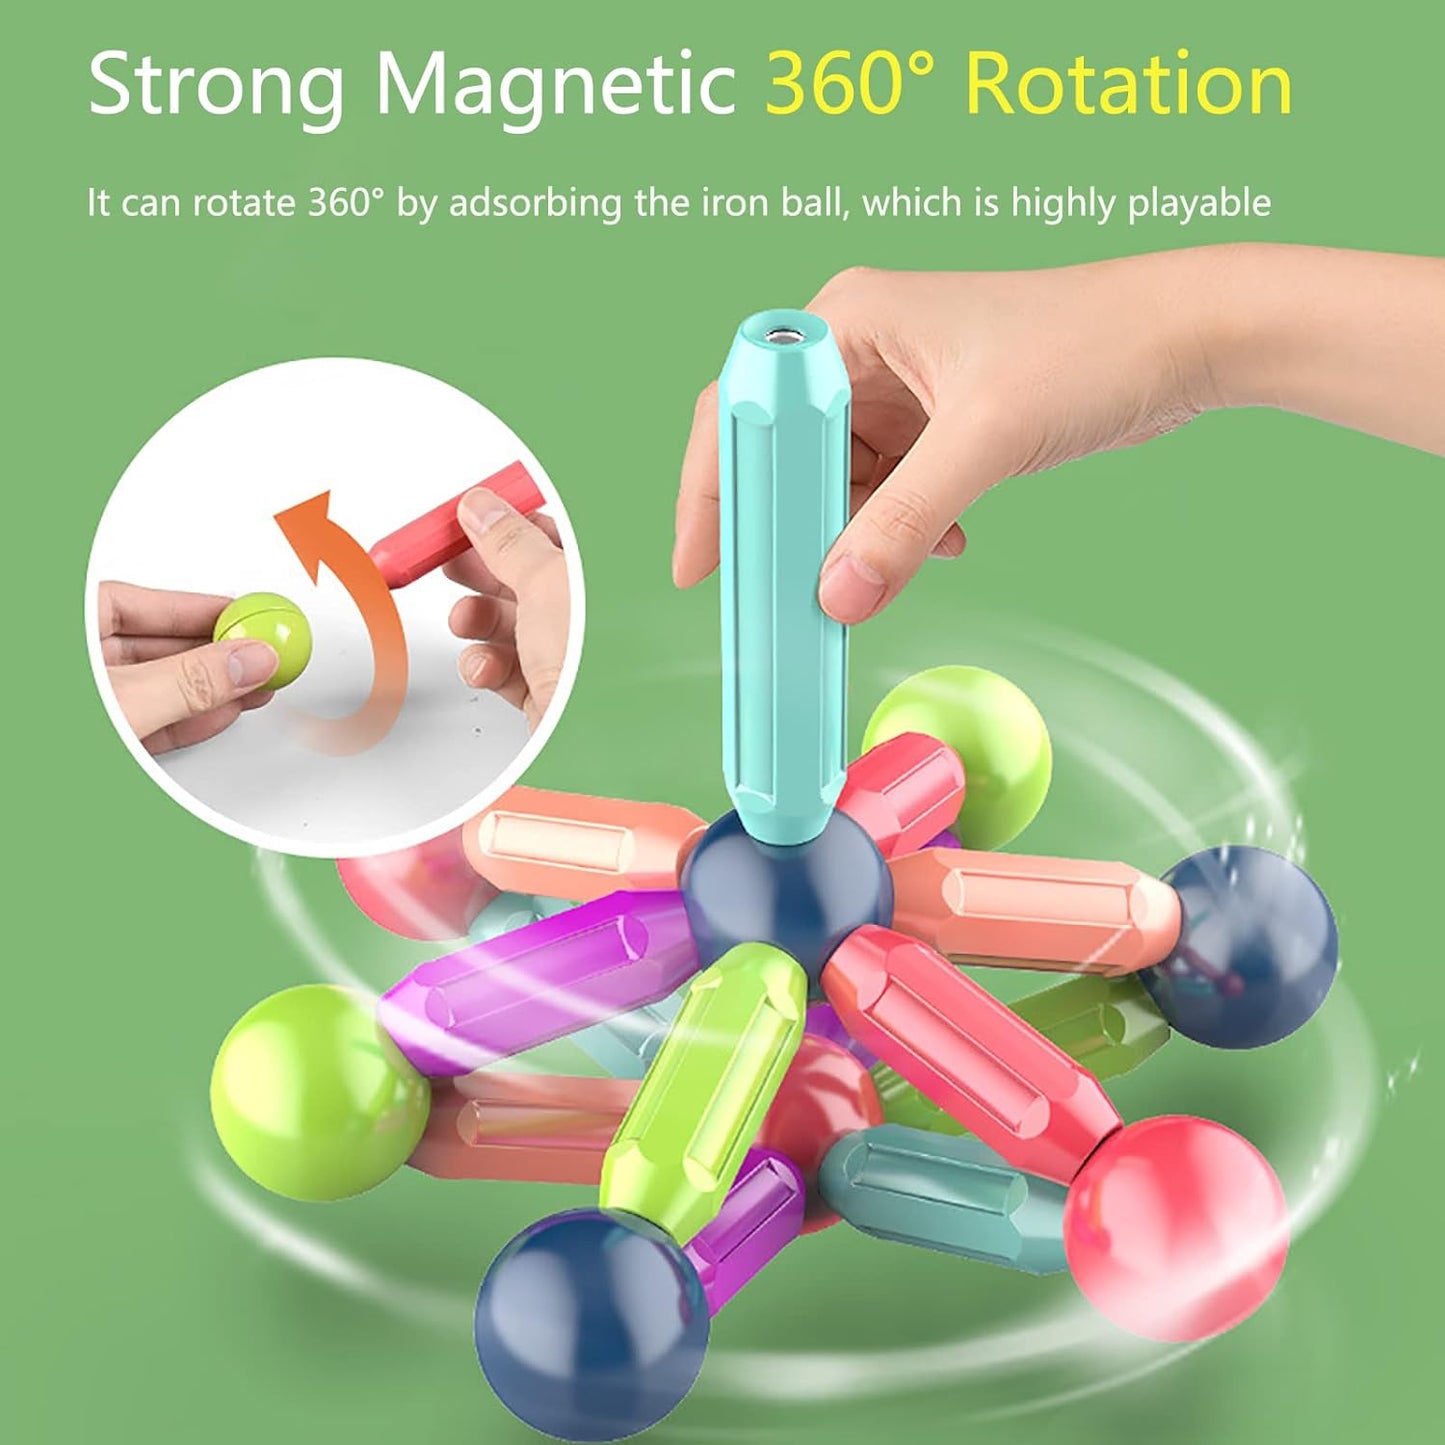 64pcs Magnetic Sticks and Balls Set | STEM | Educational